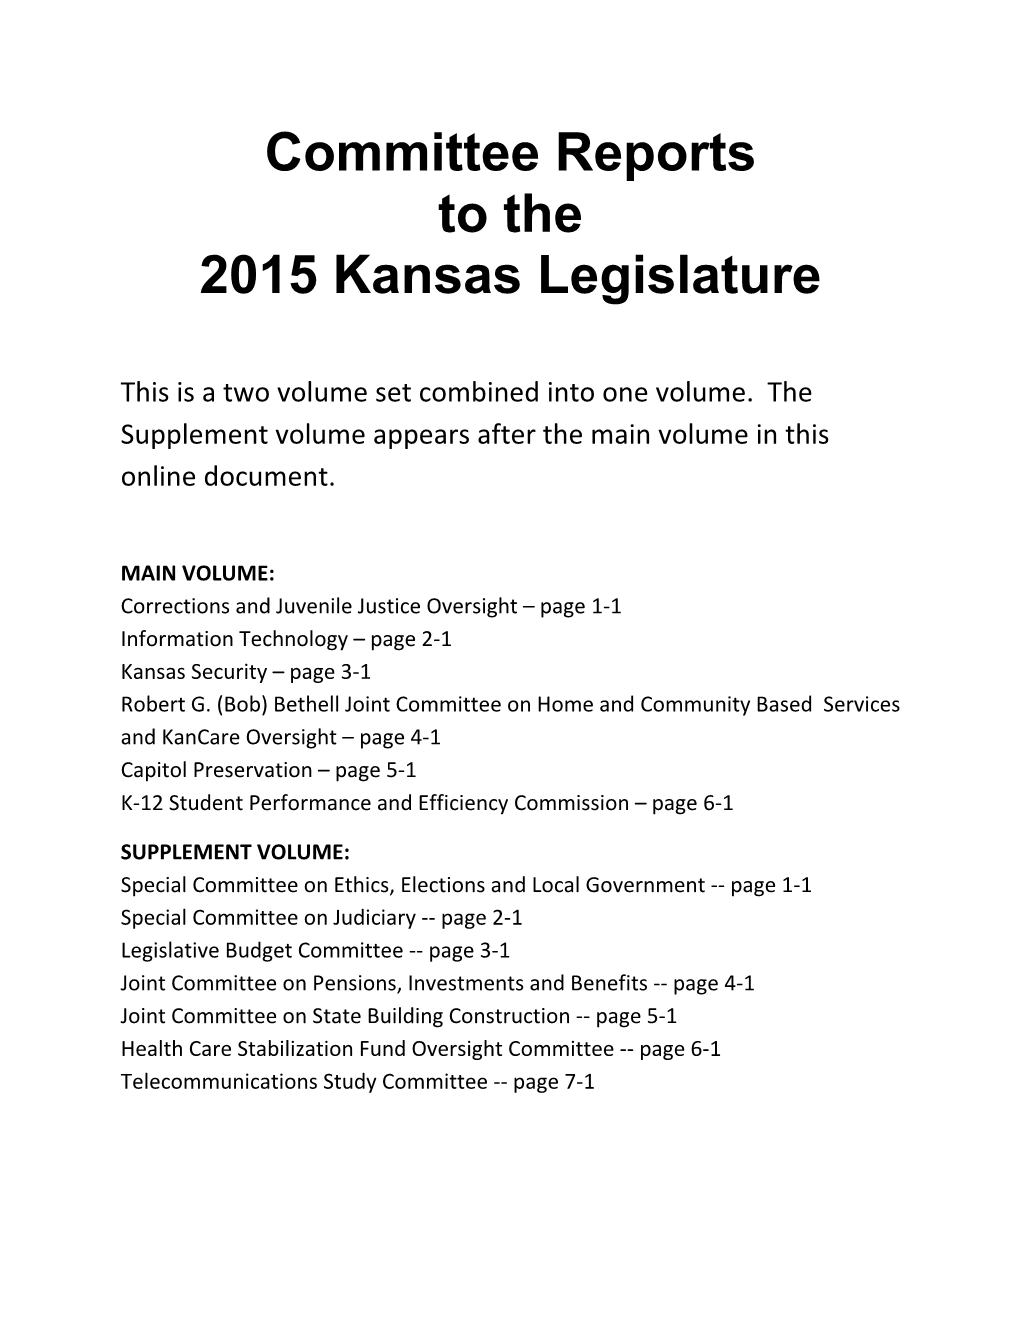 Committee Reports to the 2015 Kansas Legislature